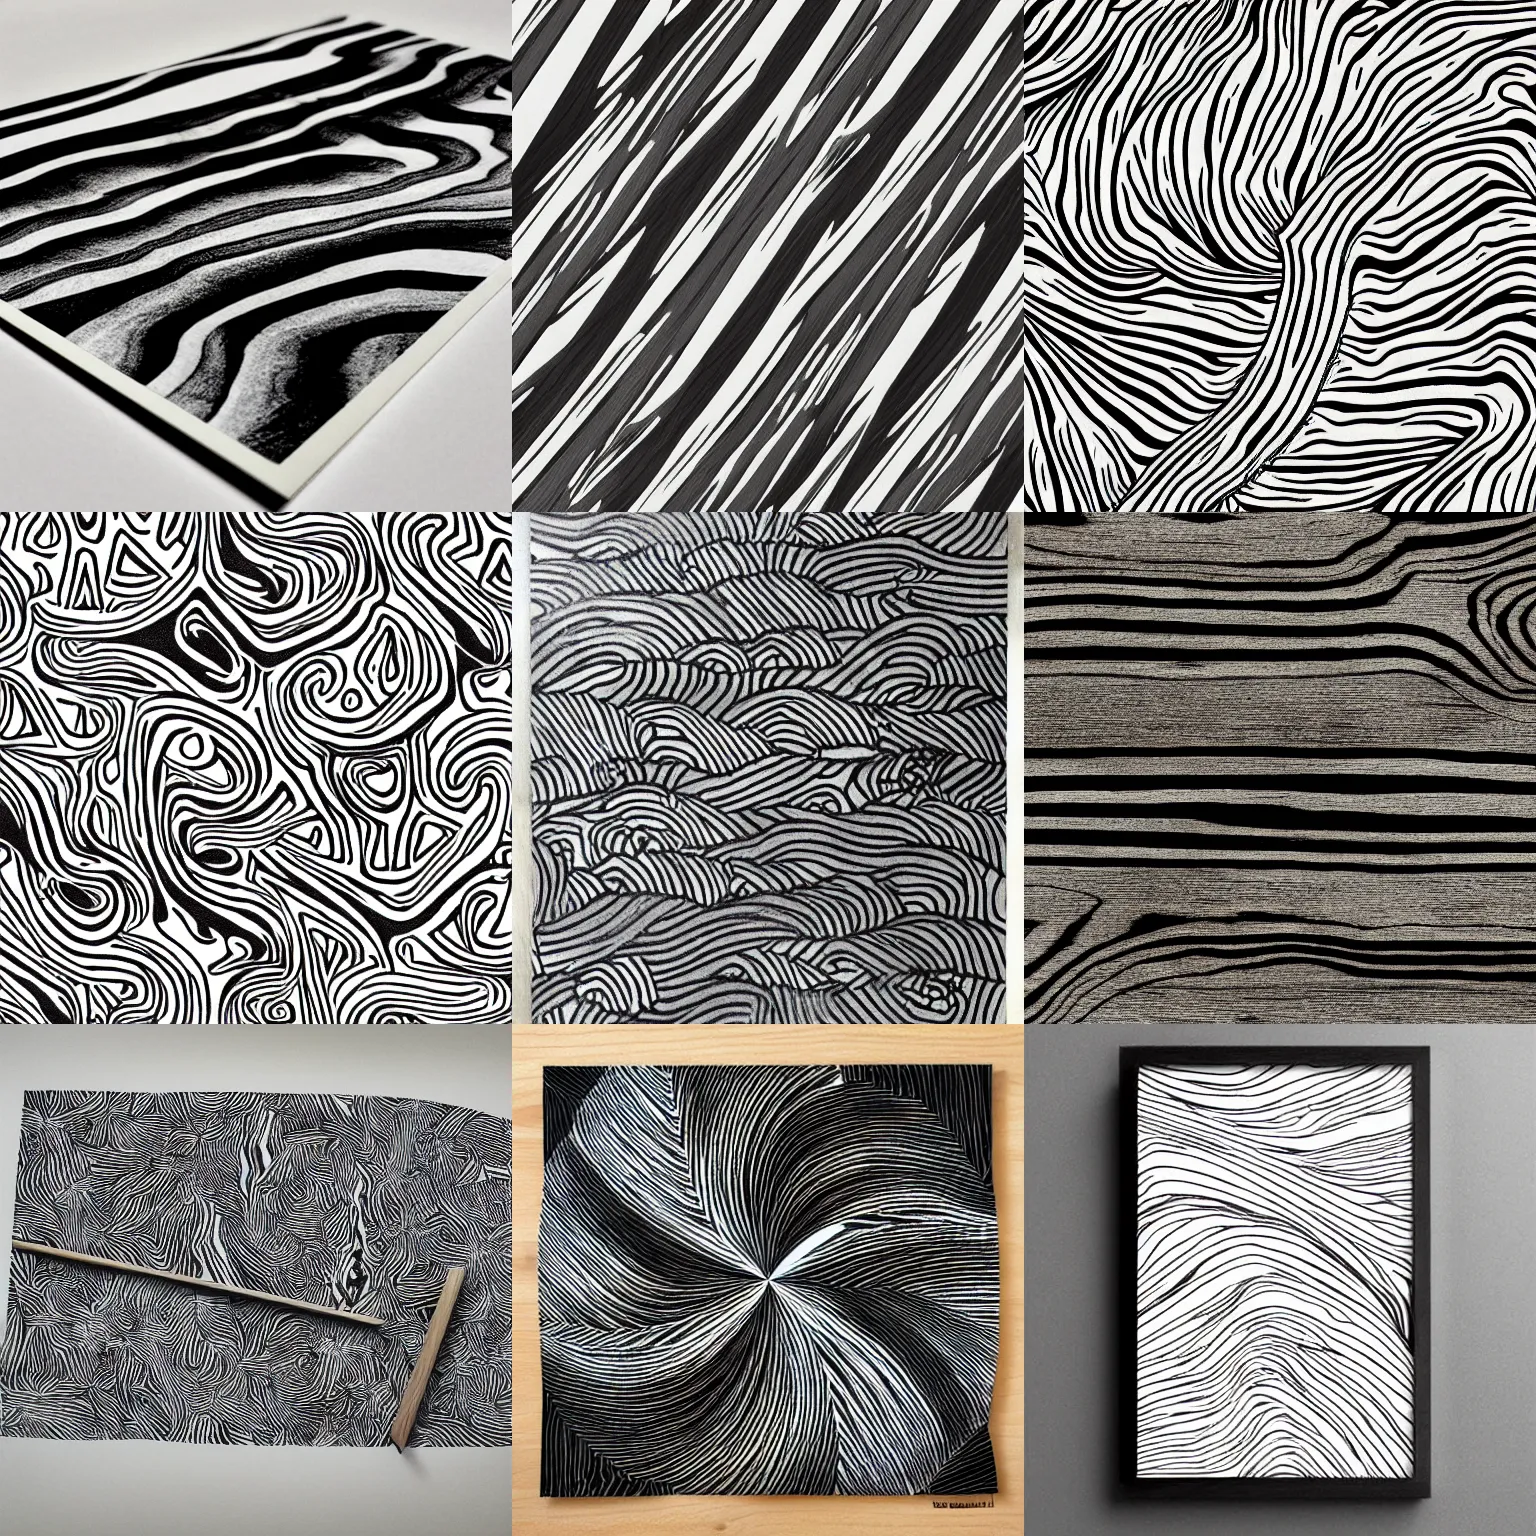 Prompt: suminagashi print black, grey, and white ink. design looks like wood grain